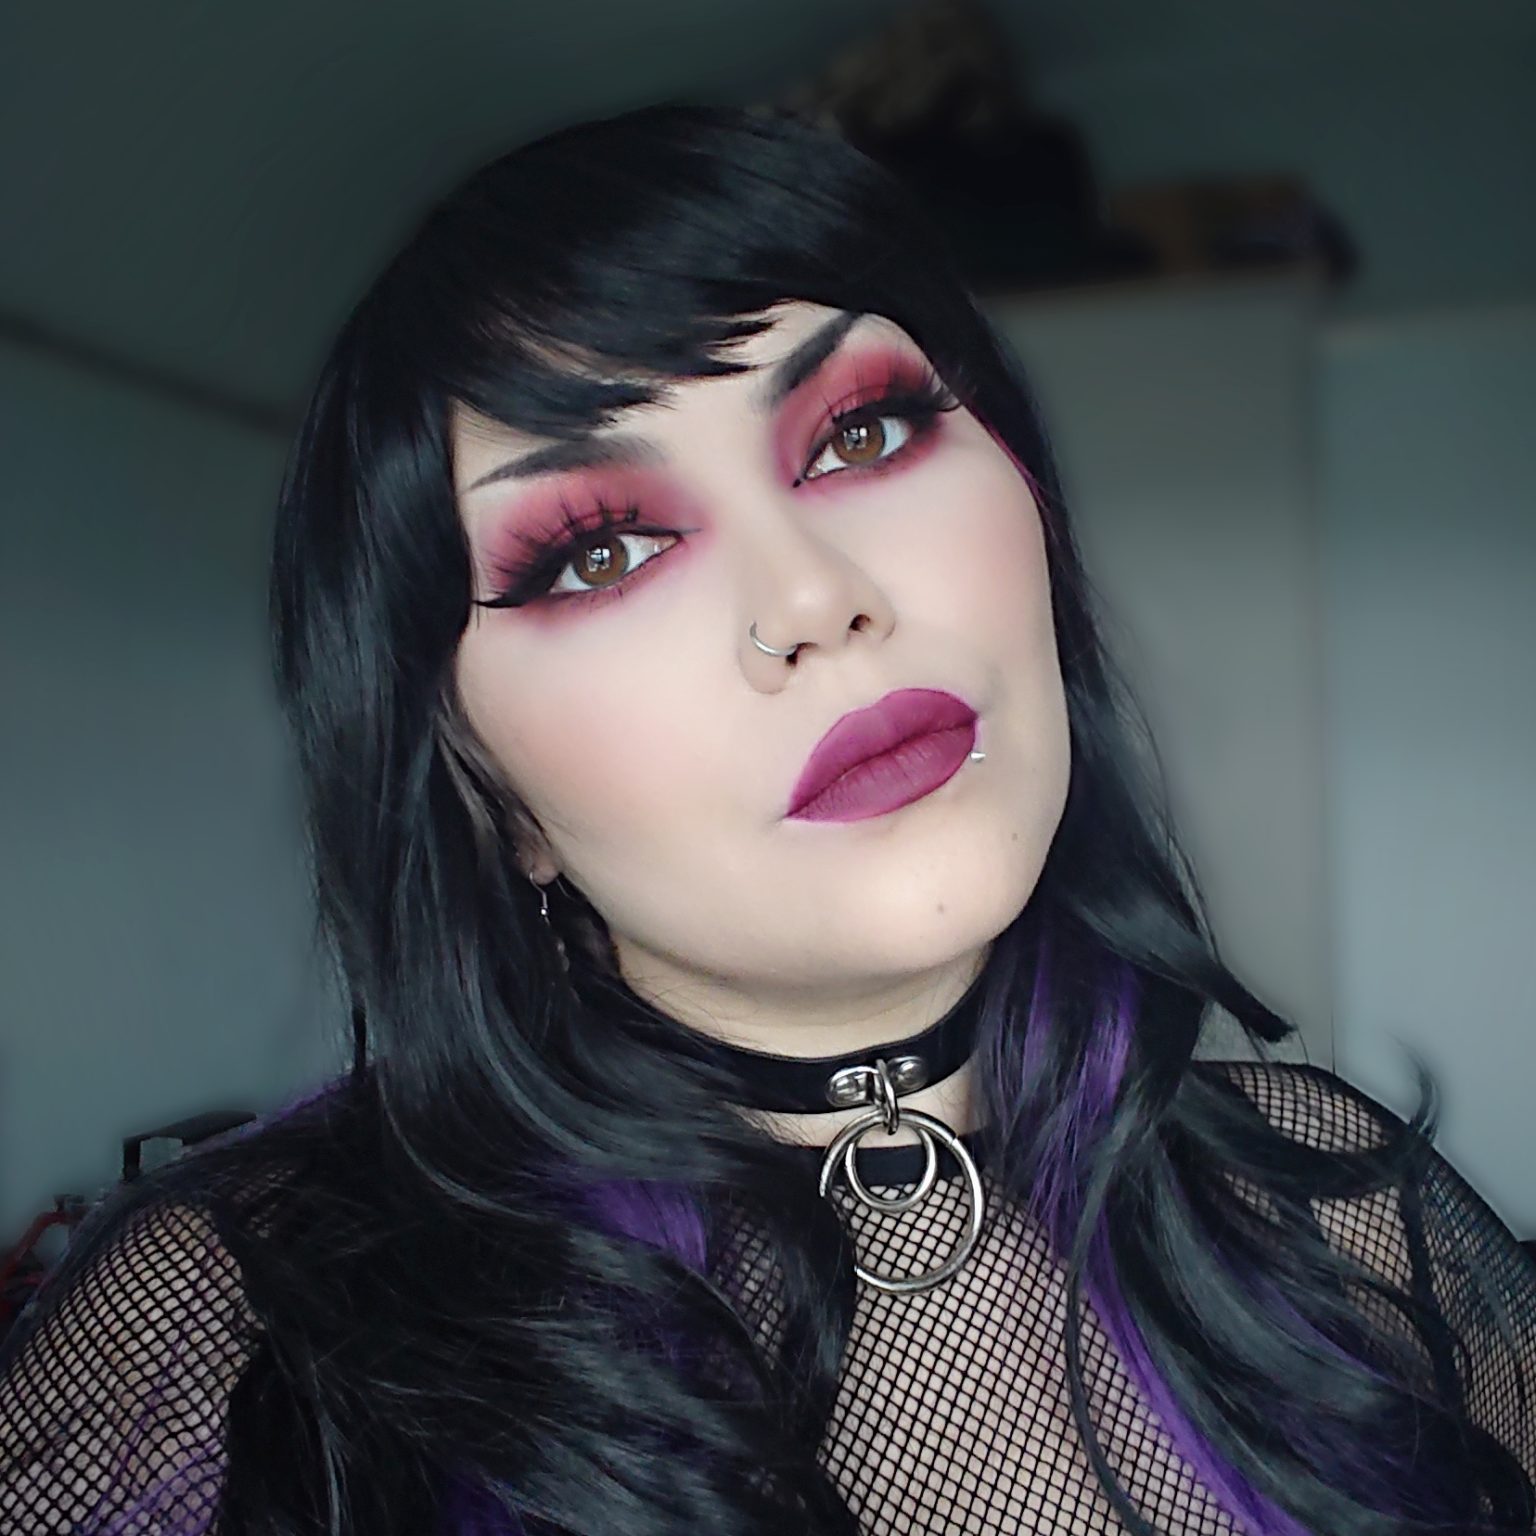 Black and purple split wig with bangs | Esmee by Lush Wigs UK